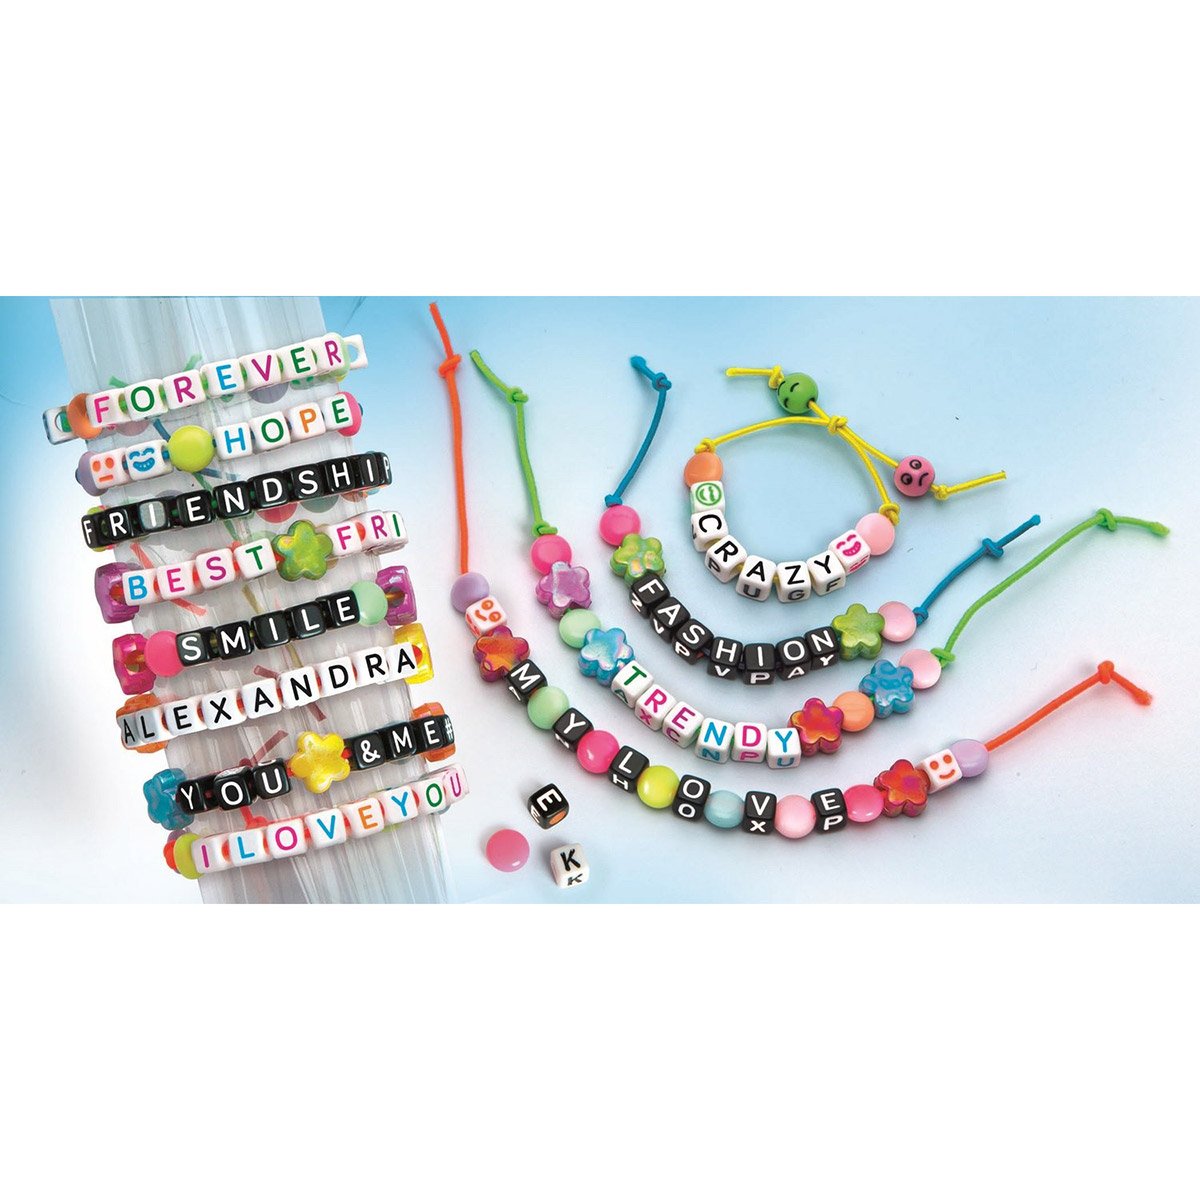 Acheter Kit créatif - les bracelets d'amitié en liberty - mon